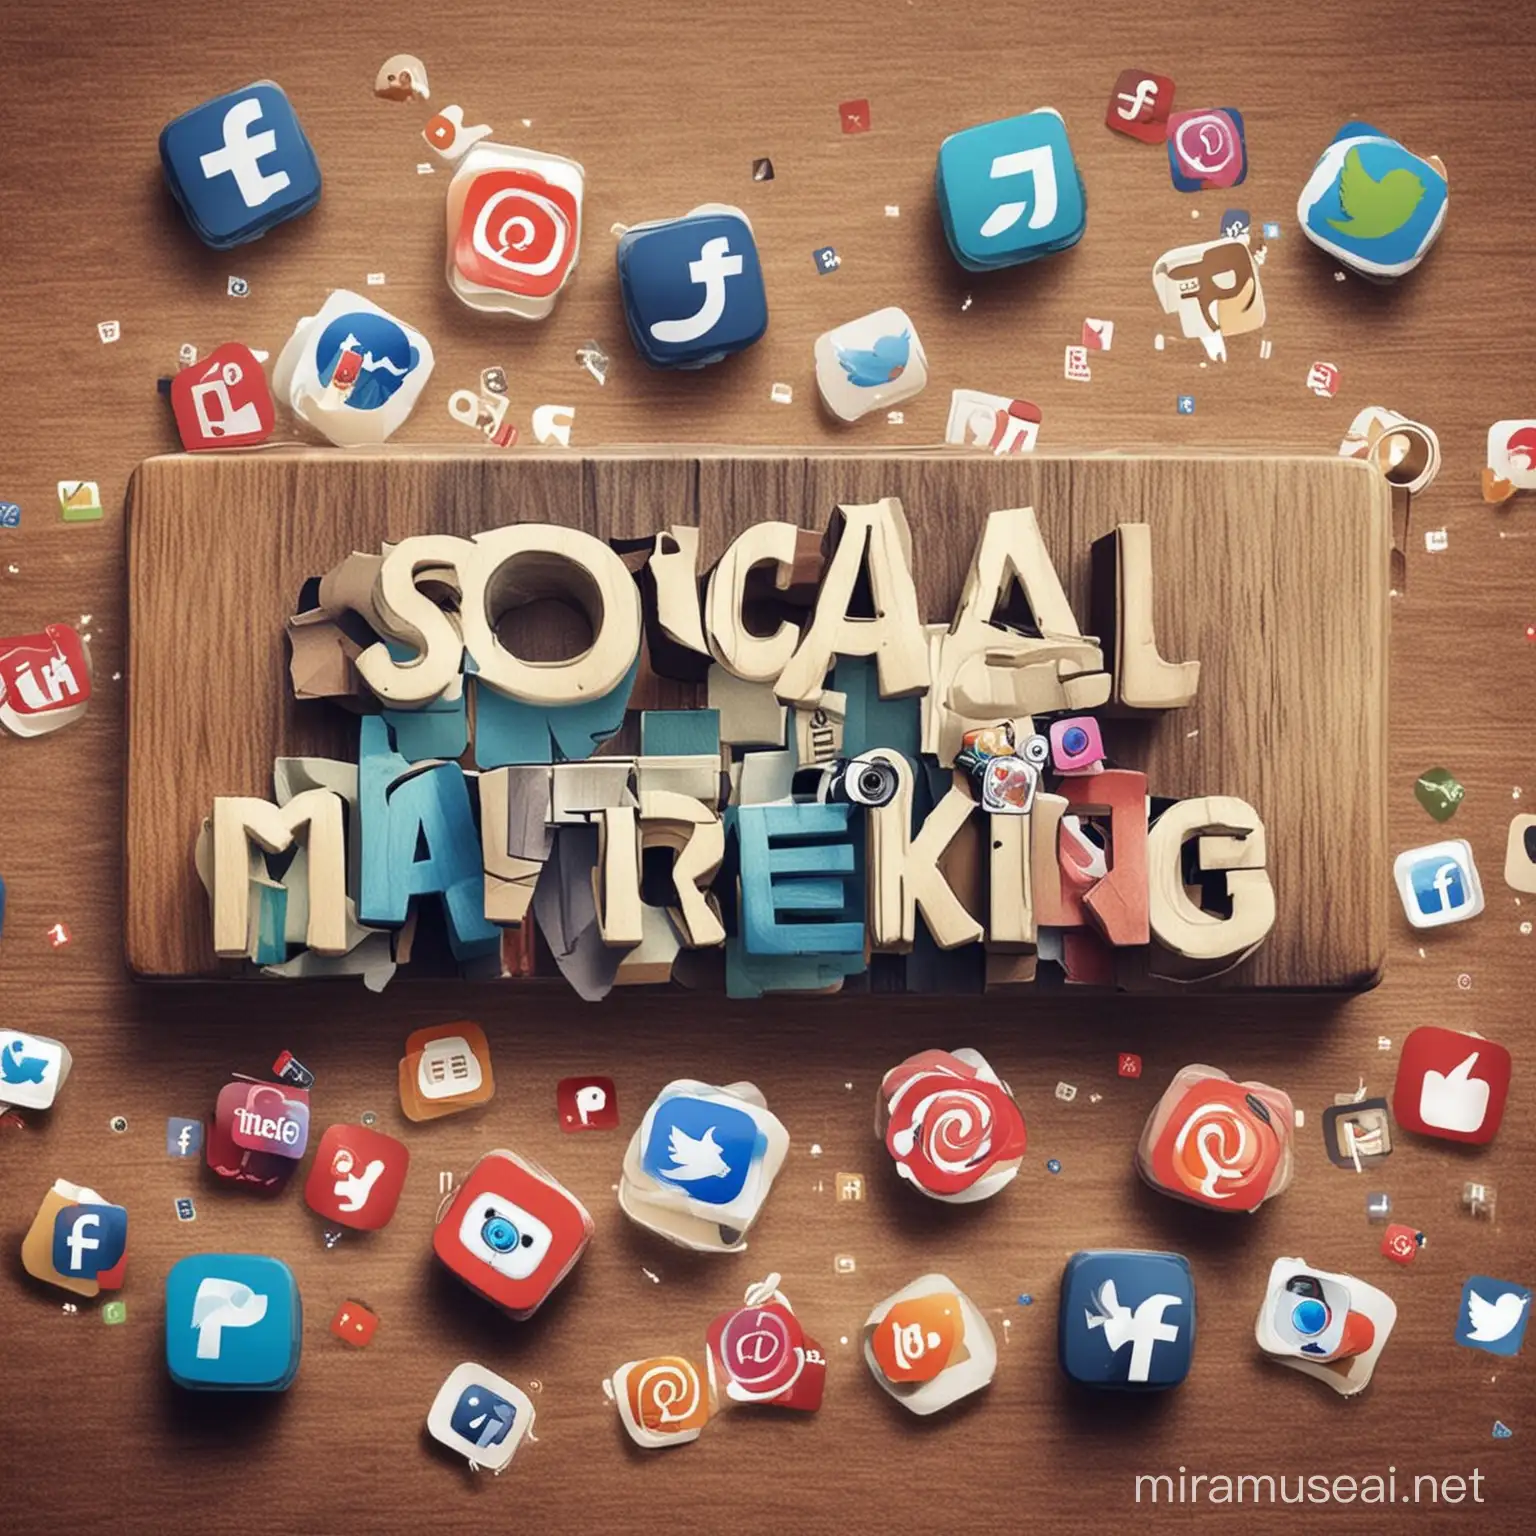 SOCIAL MEDIA MARKETING TEAME

